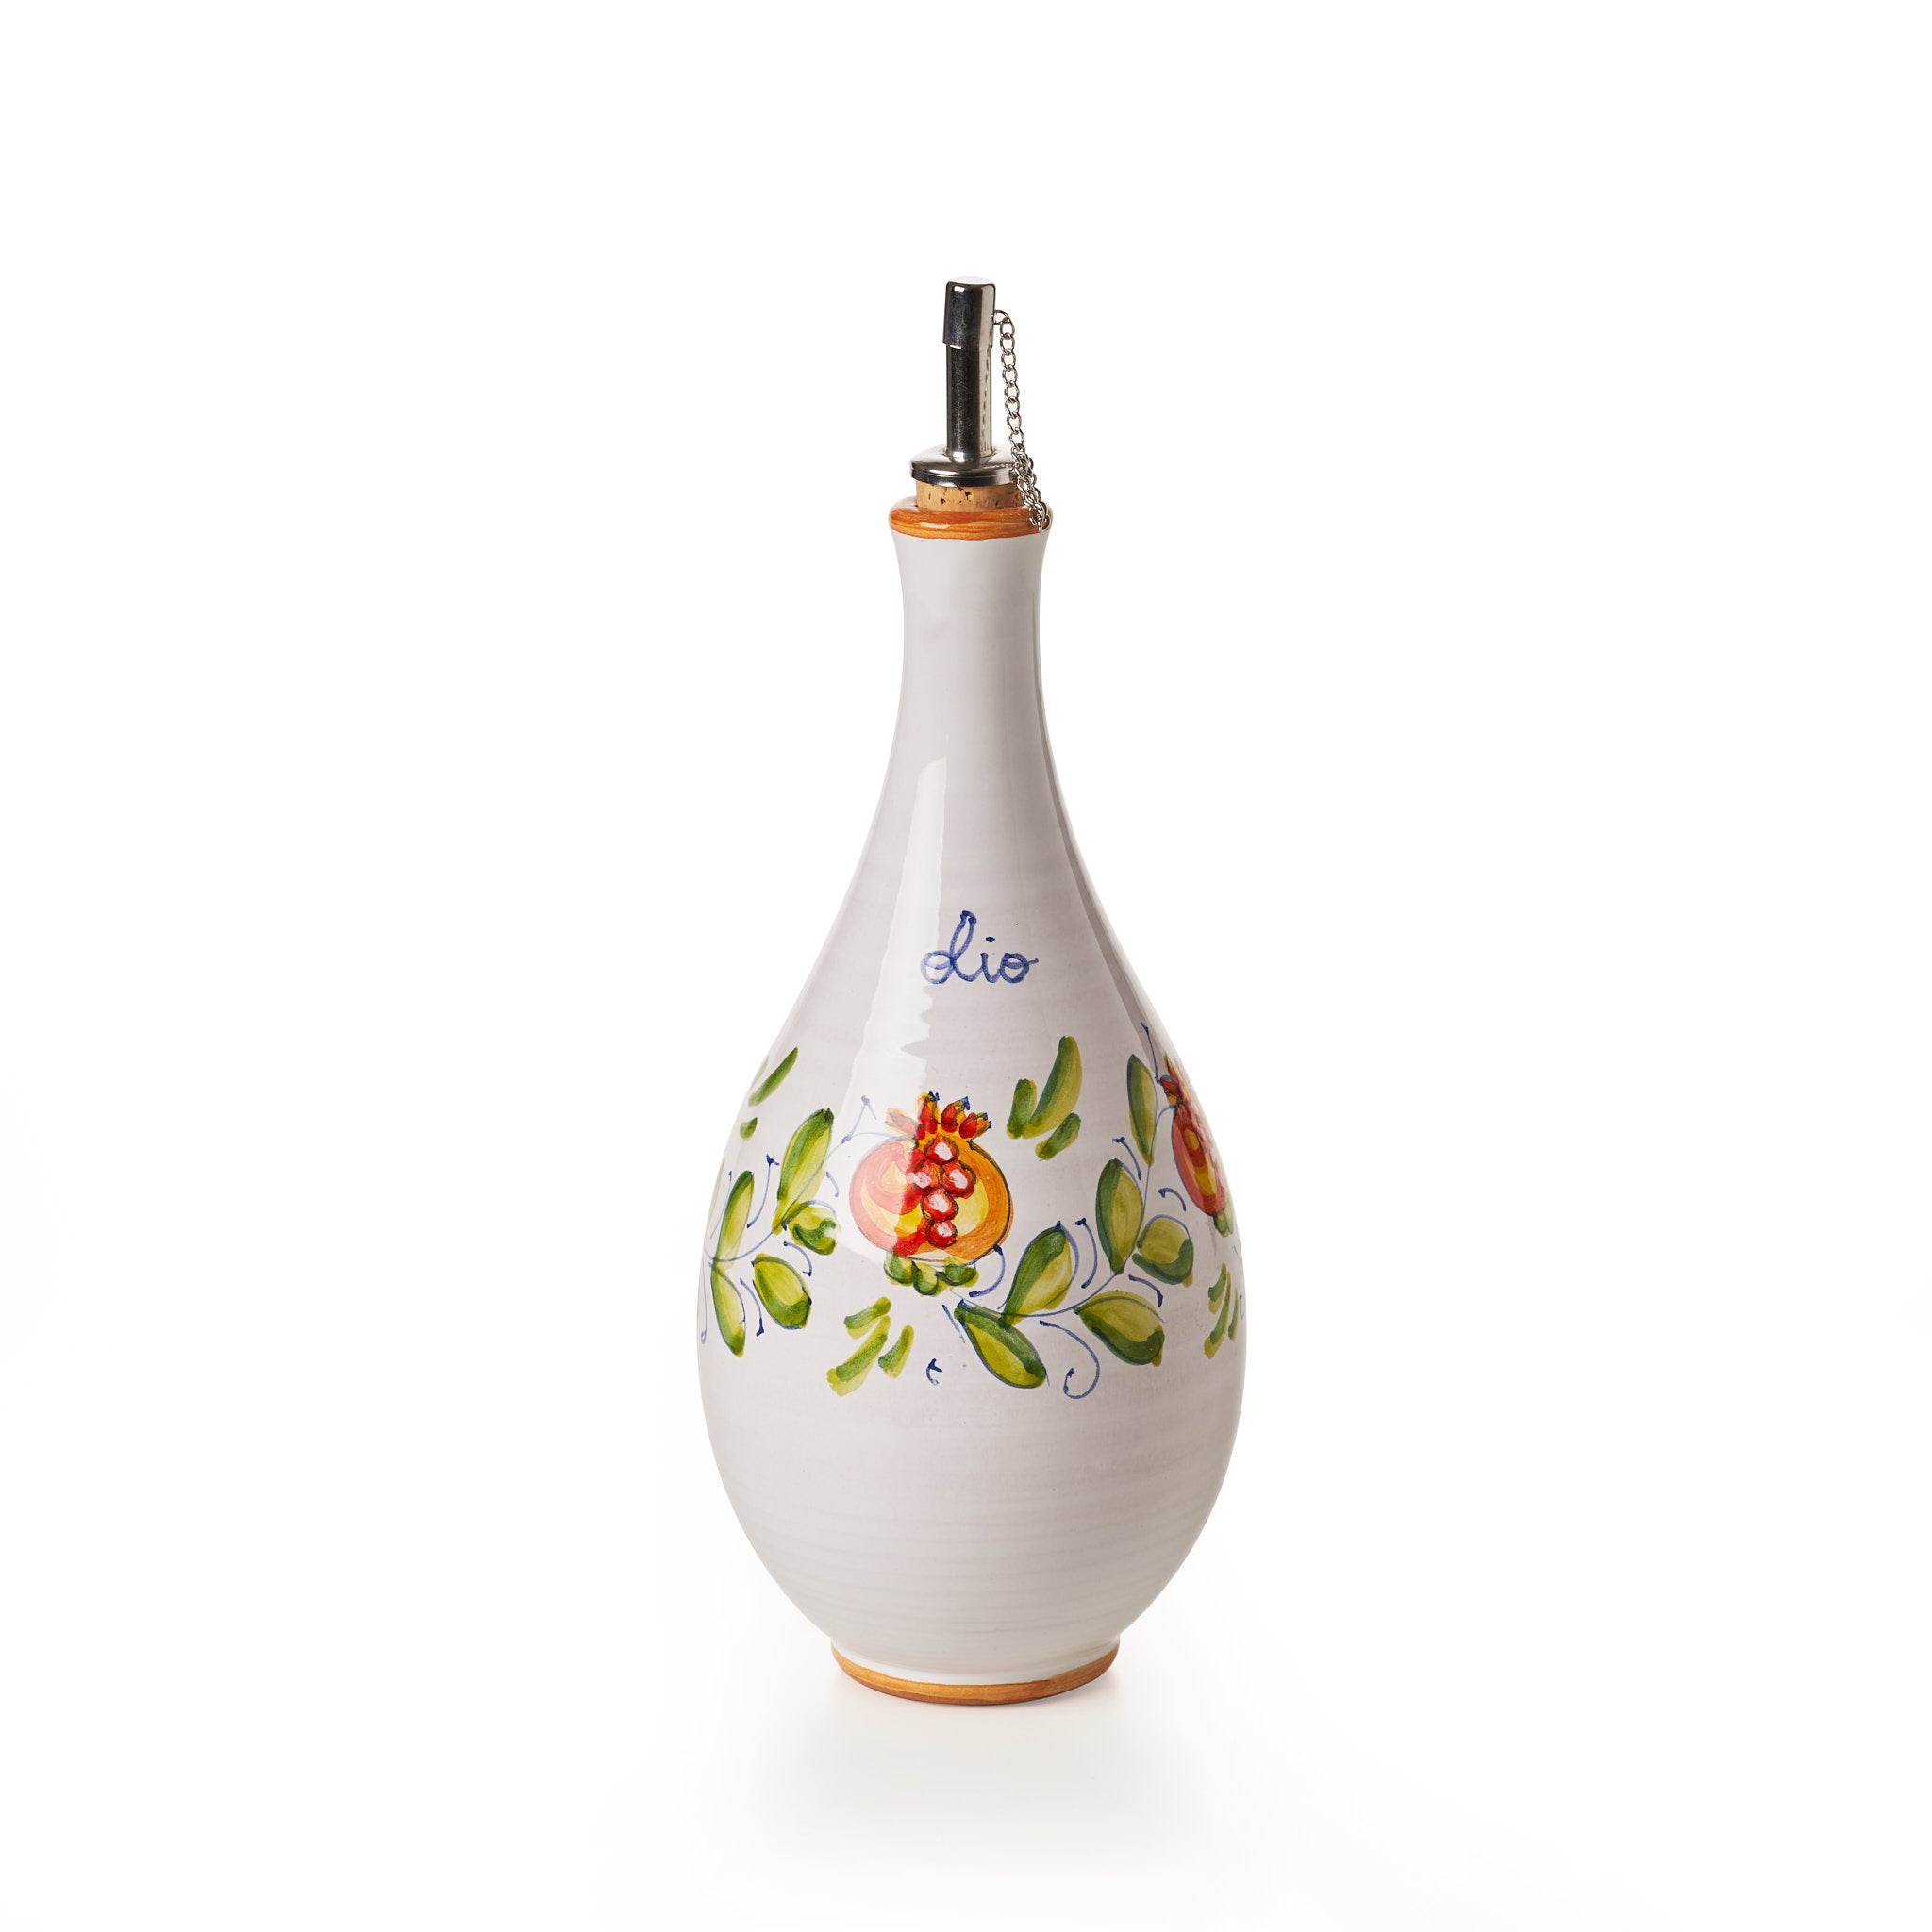 sbigoli-ceramics-pottery-oil-bottle-saucer-spoon-holder-set-pomegranates